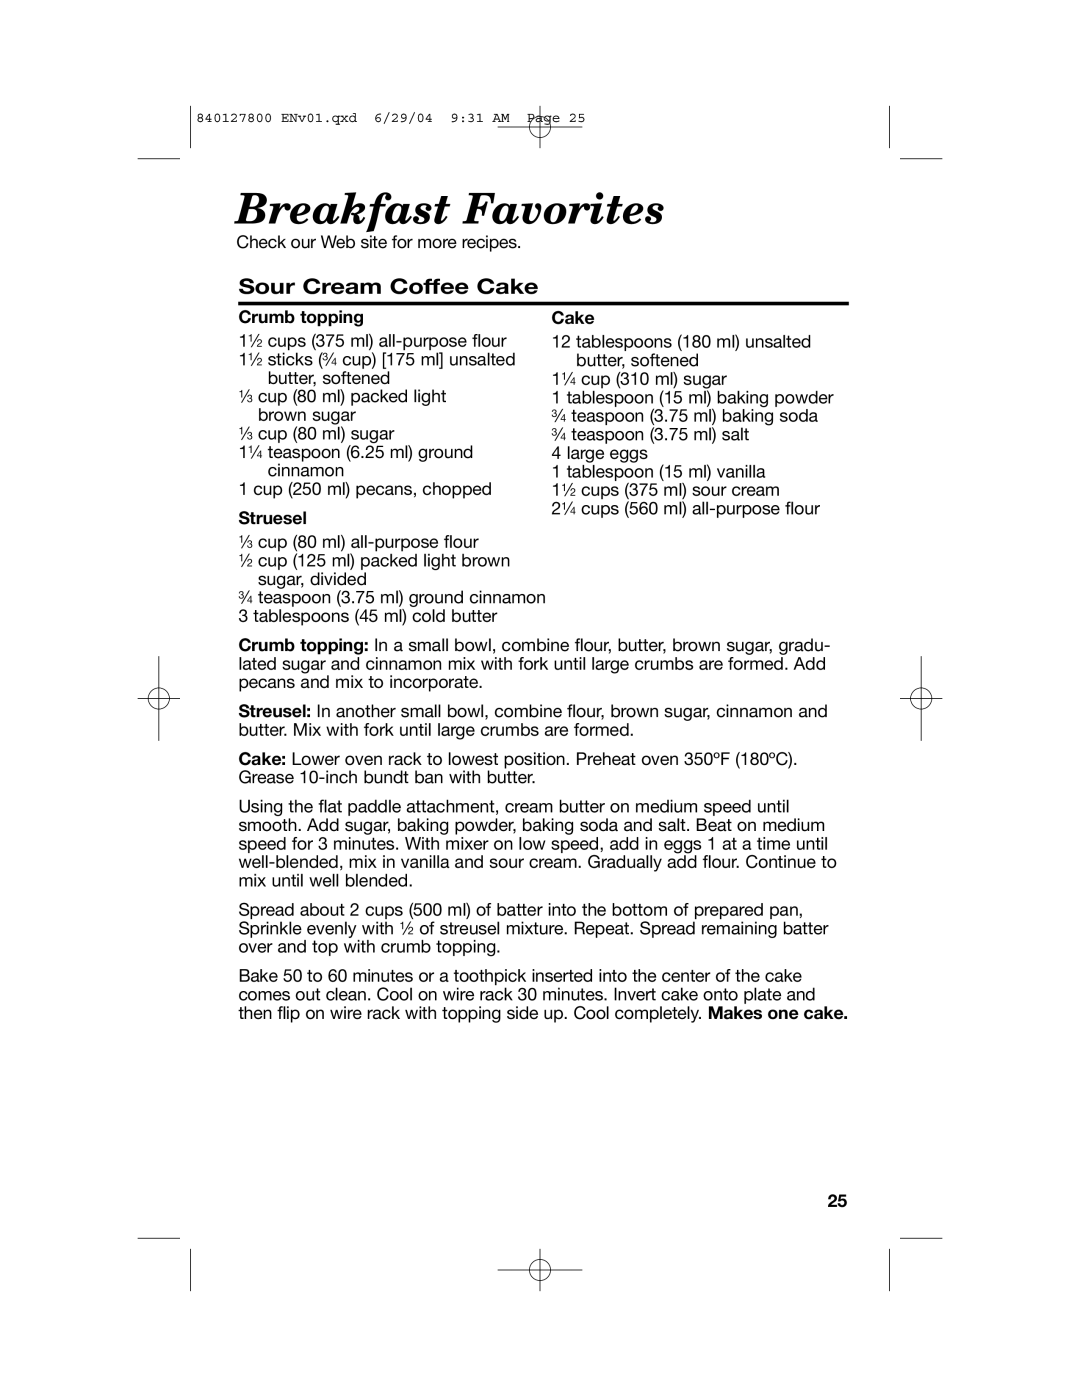 Hamilton Beach 63225 manual Breakfast Favorites, Sour Cream Coffee Cake, Crumb topping, Struesel 